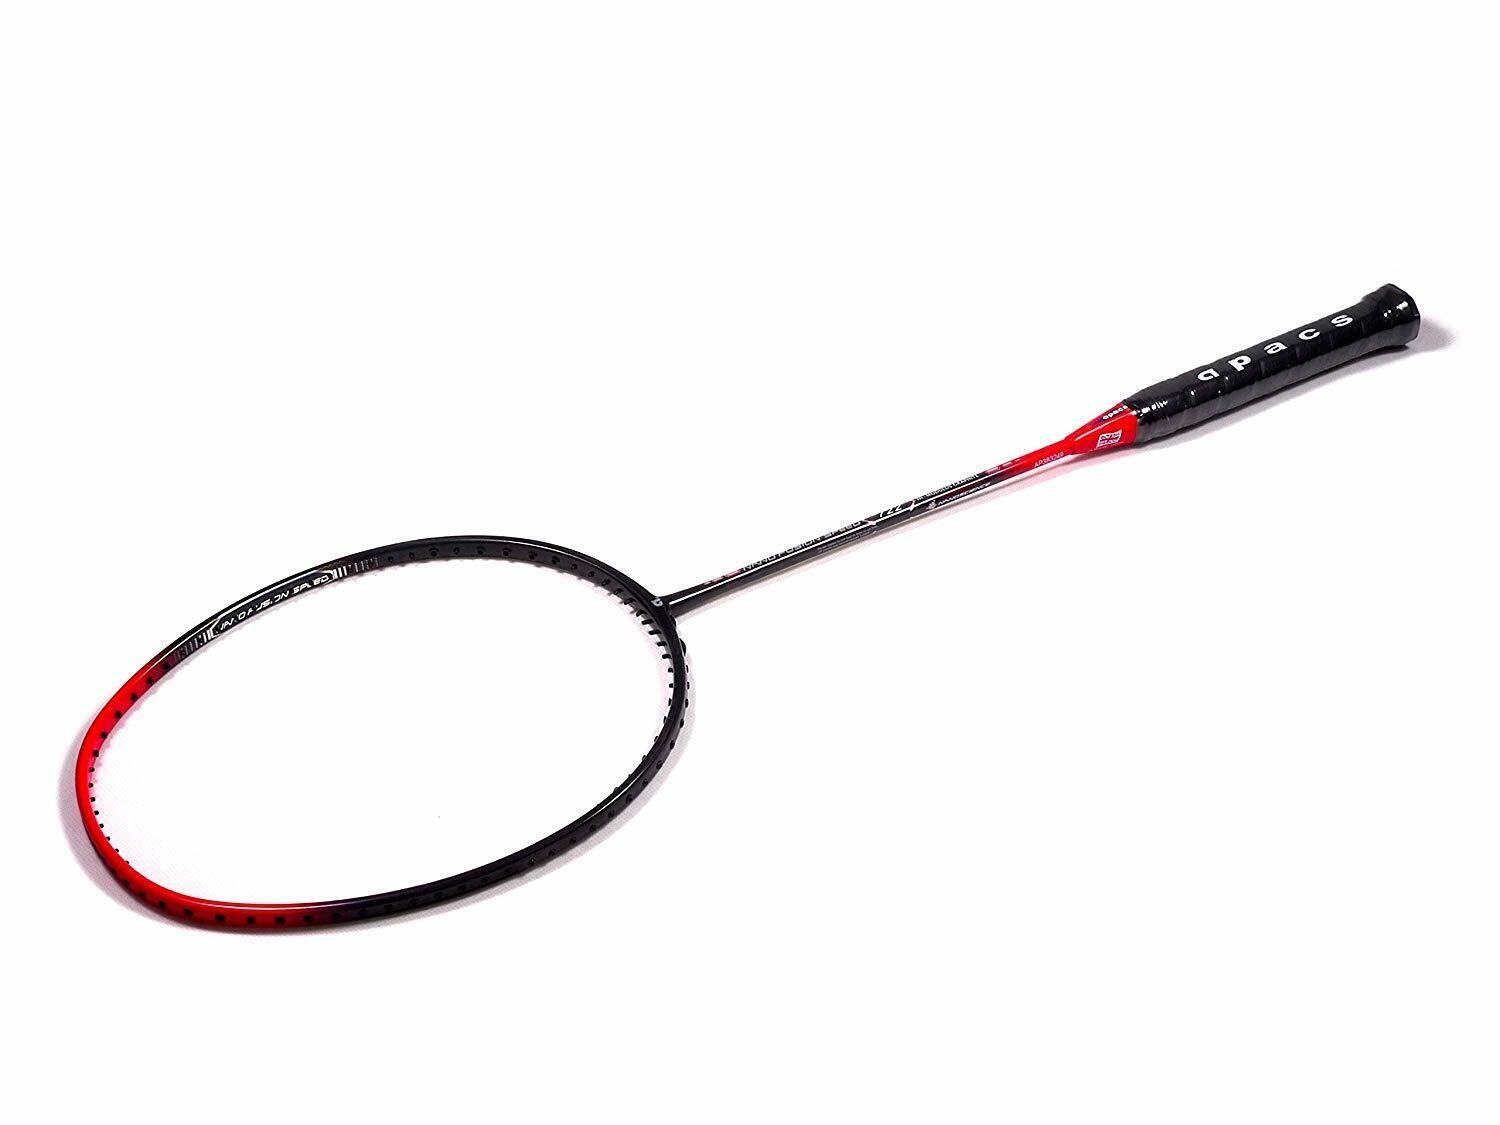 Apacs NANO FUSION SPEED 722 (Black and Red) Badminton Racket